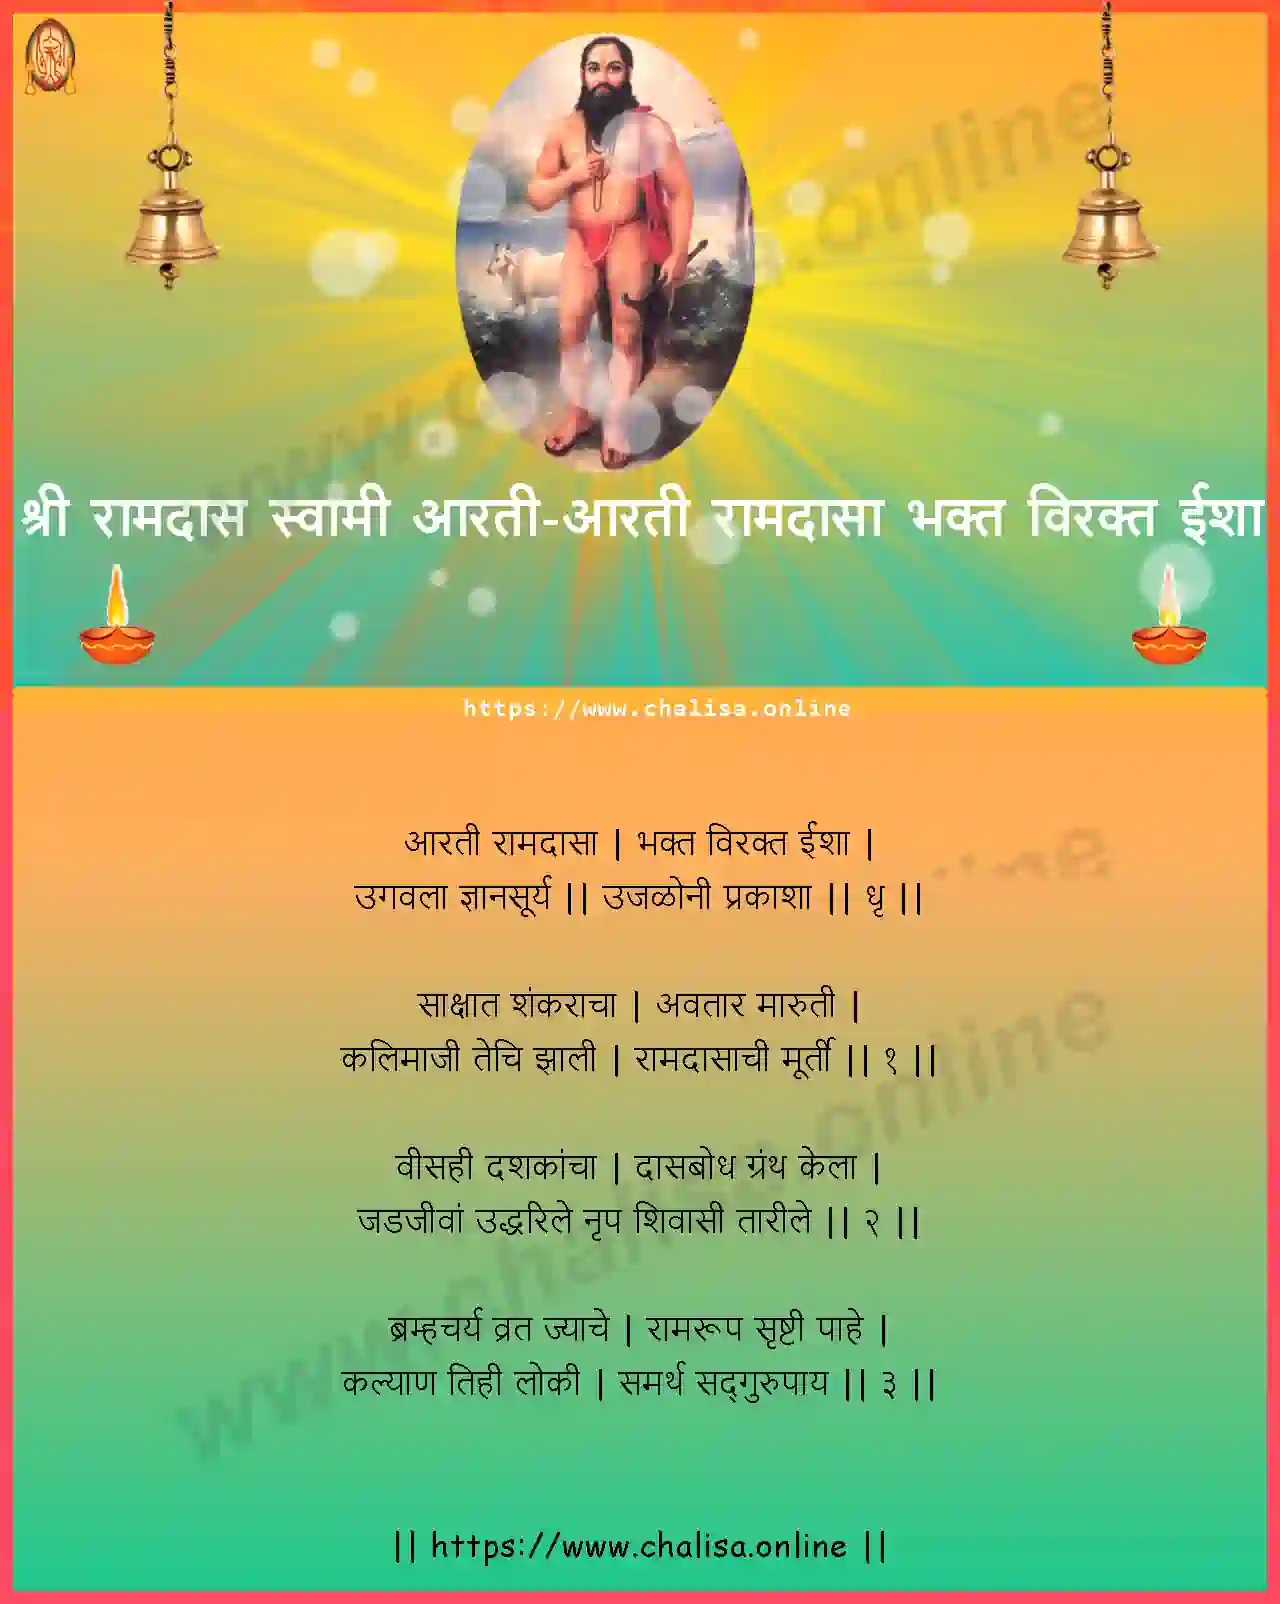 aarti-ramdasa-bhakta-ramdas-swami-aarti-marathi-lyrics-download